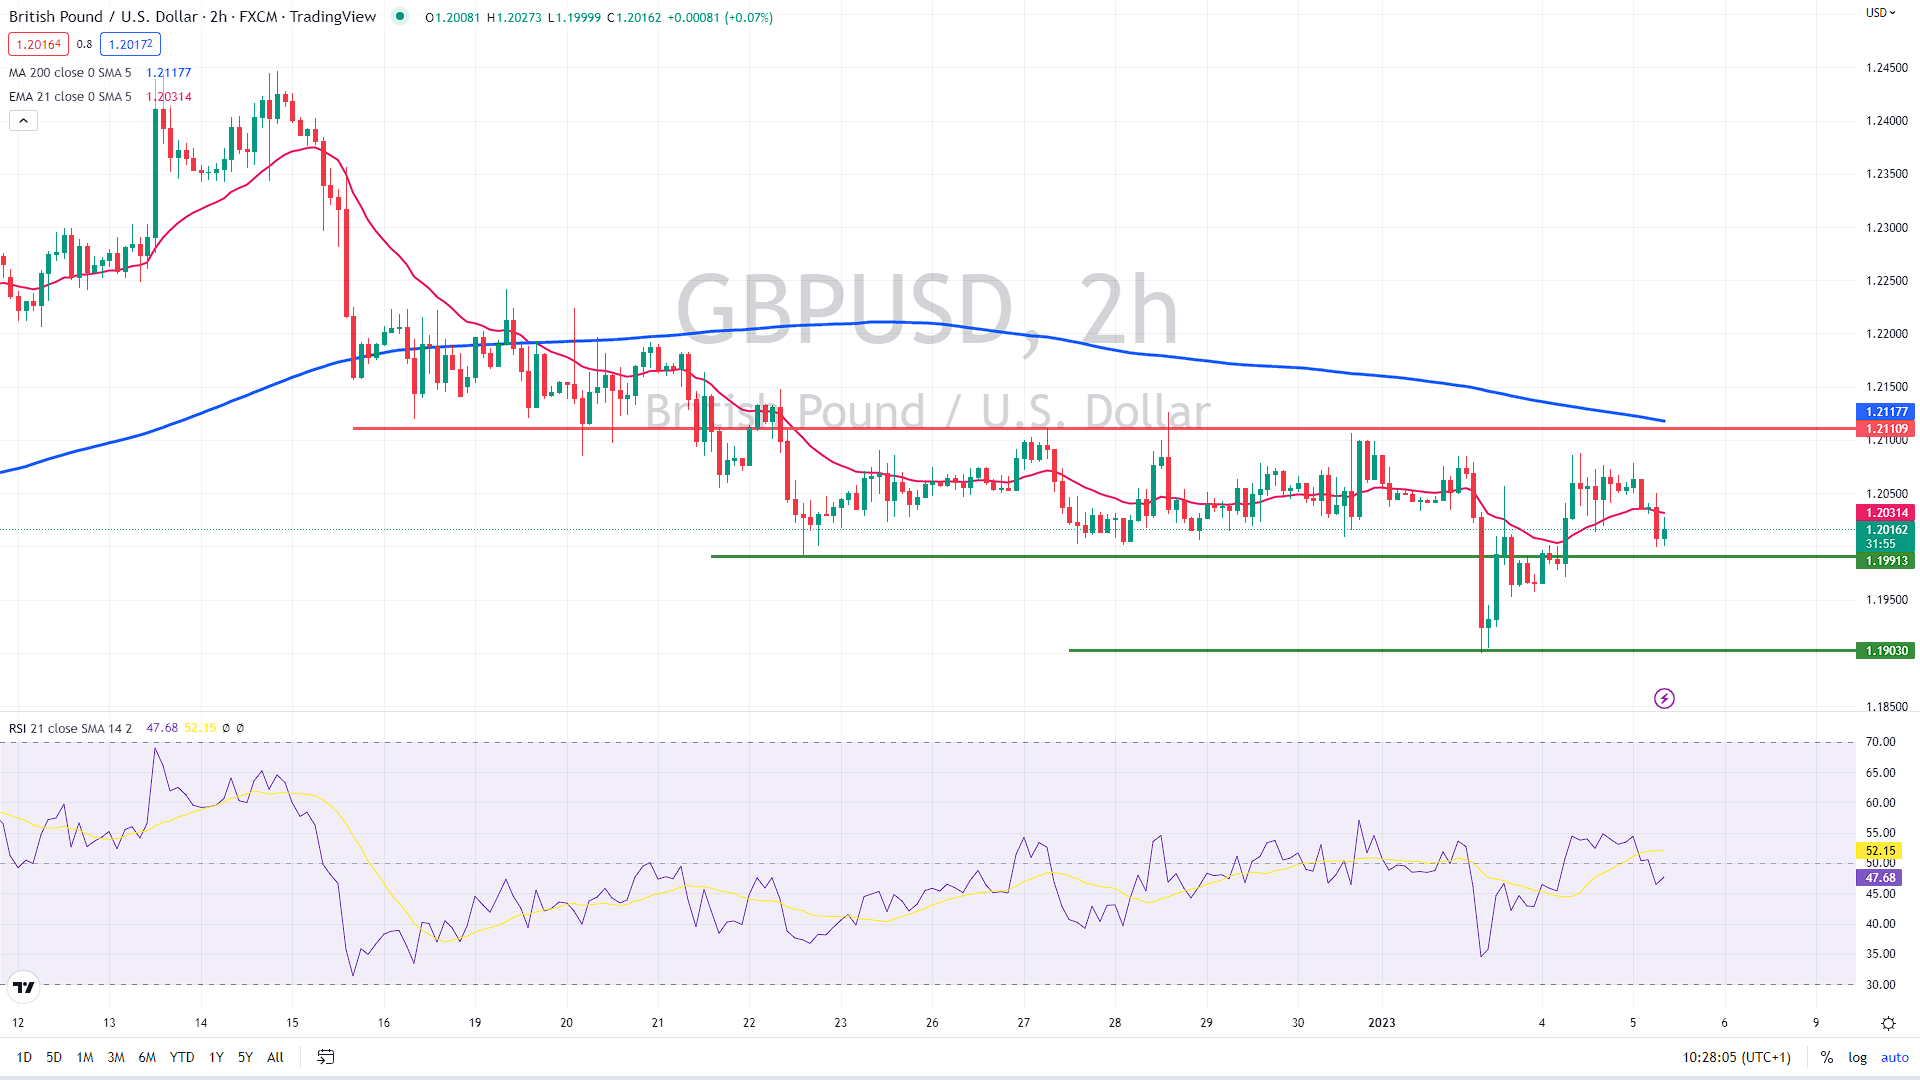 GBP/USD 2h chart